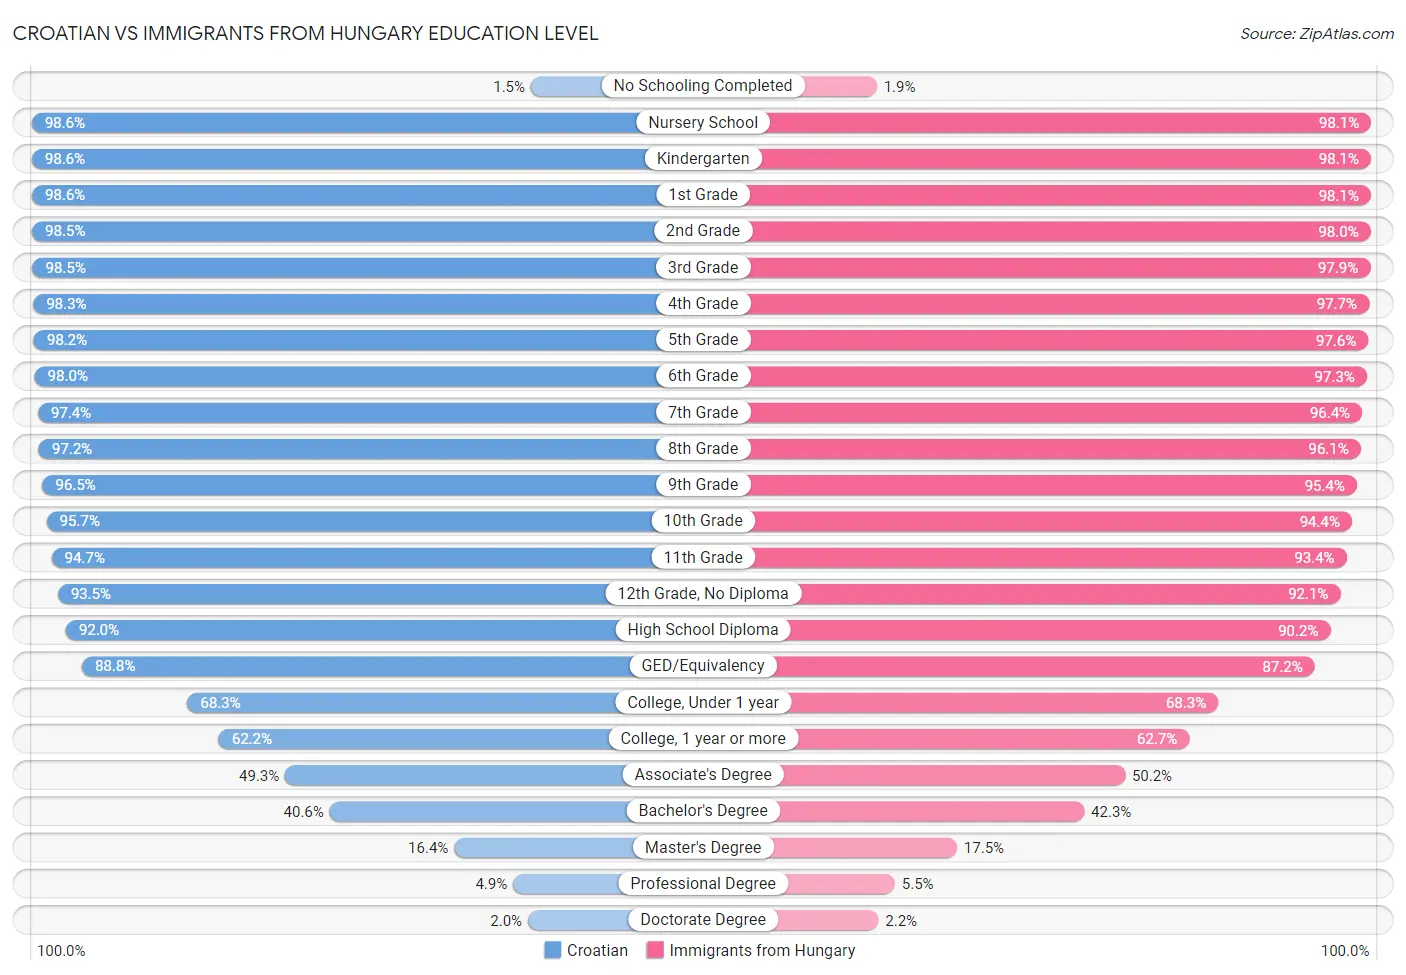 Croatian vs Immigrants from Hungary Education Level